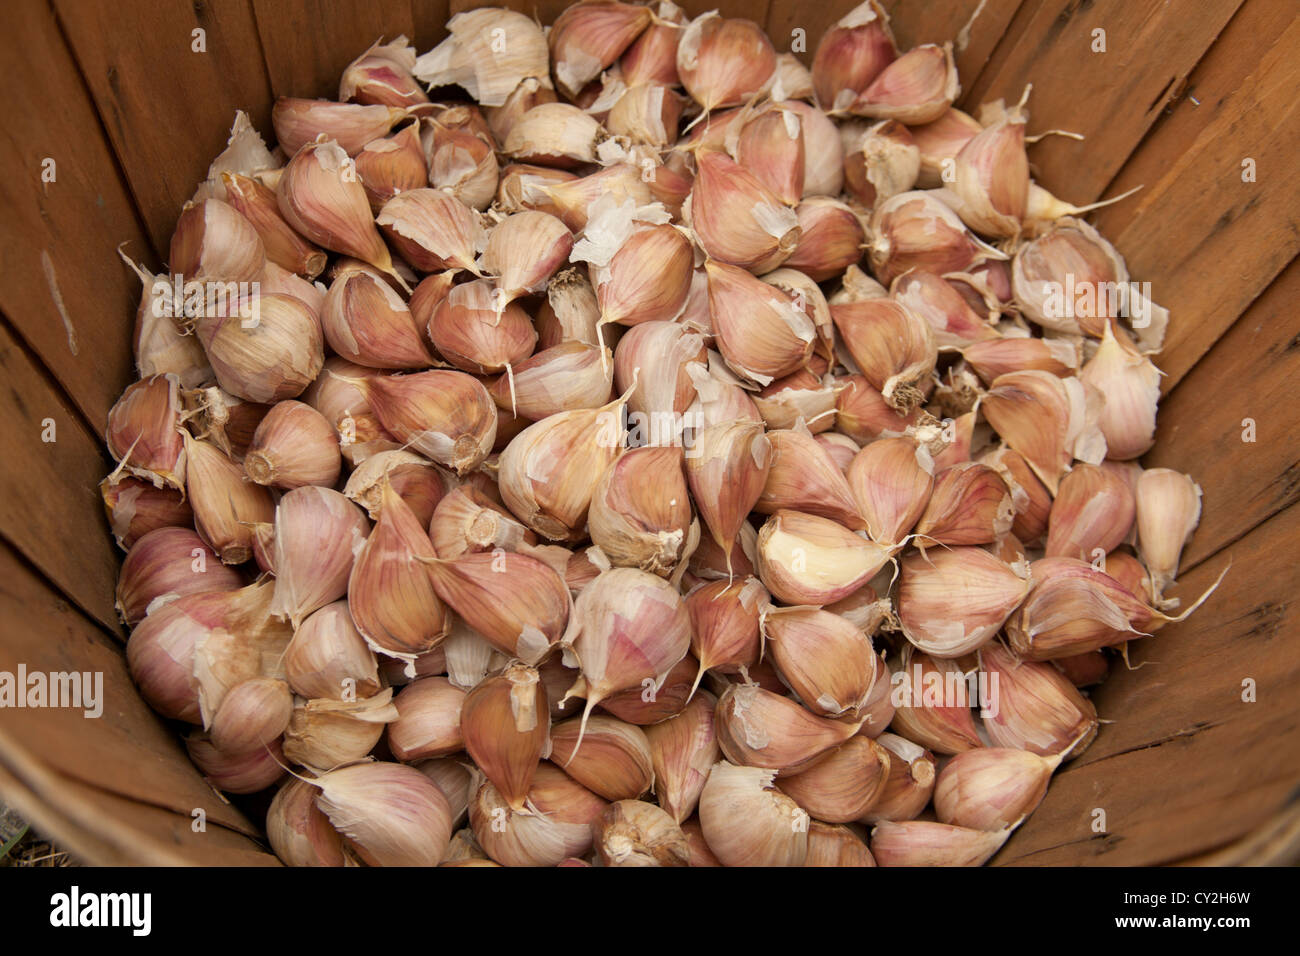 Basket of garlic cloves Stock Photo